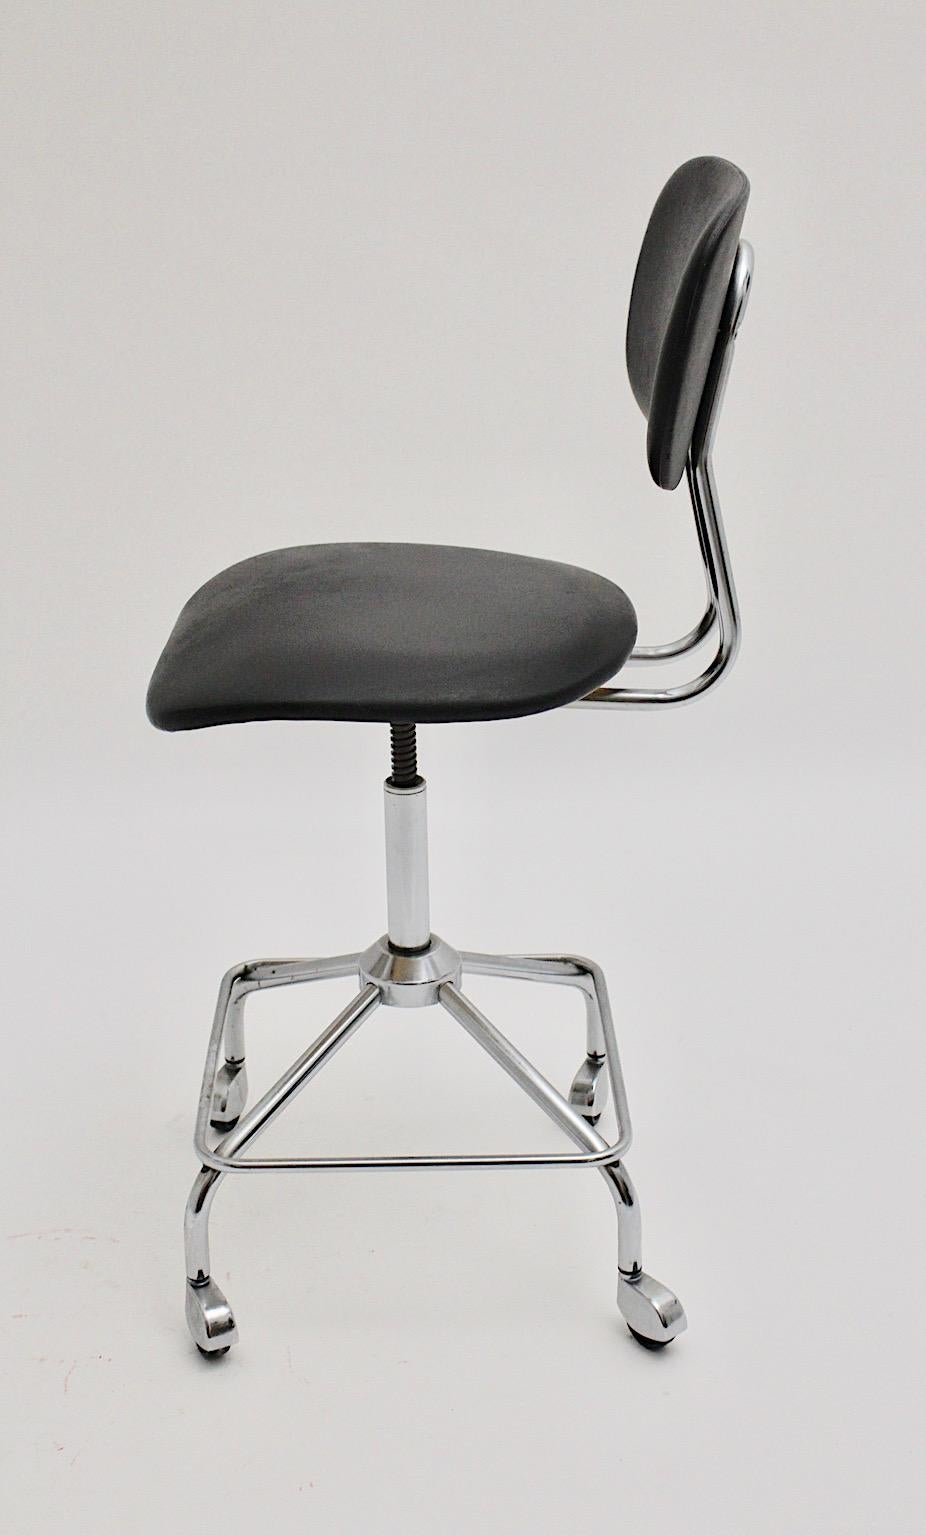 Mid-Century Modern Vintage Chromed Black Desk Chair Office Chair, 1950s, Germany 1